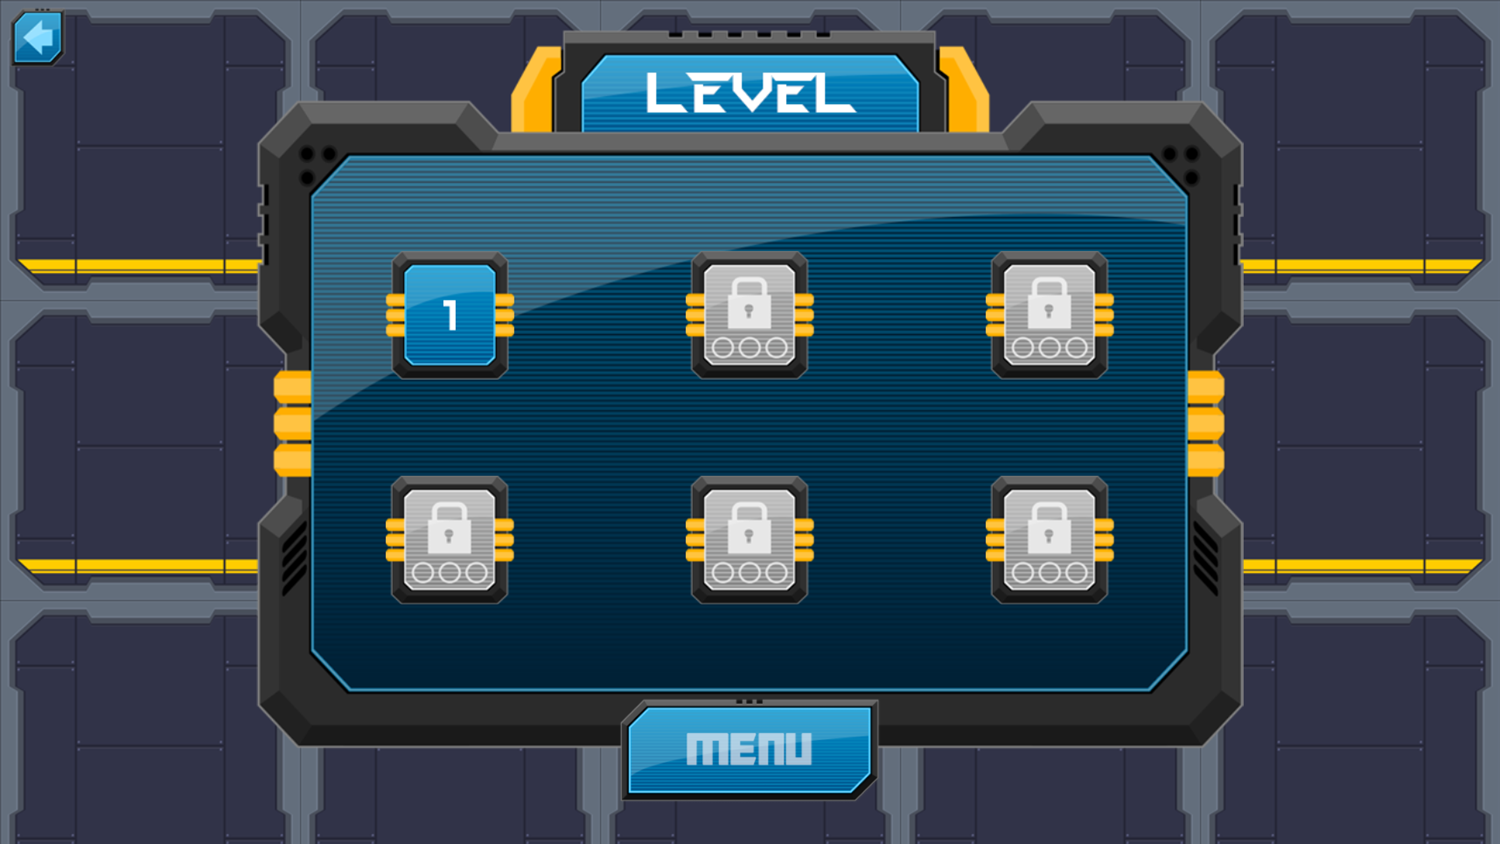 Blastman Game Level Select Screenshot.